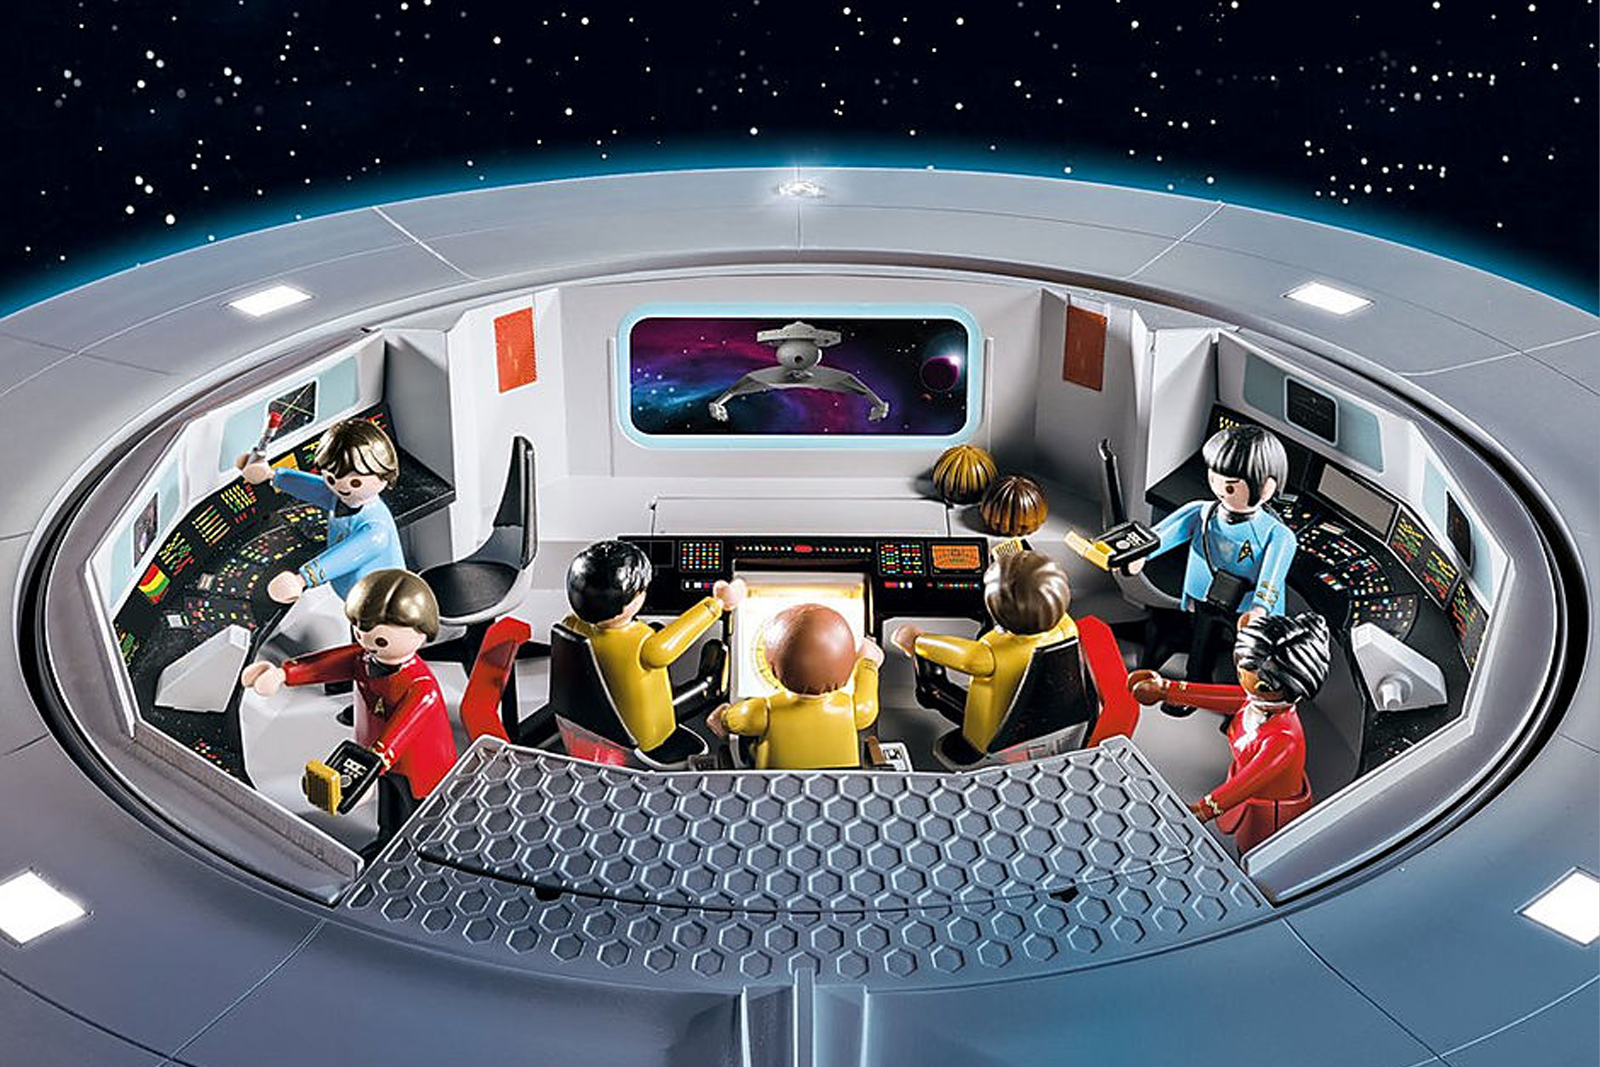 Playmobil's new Star Trek set takes us back to the original TV show photo 1